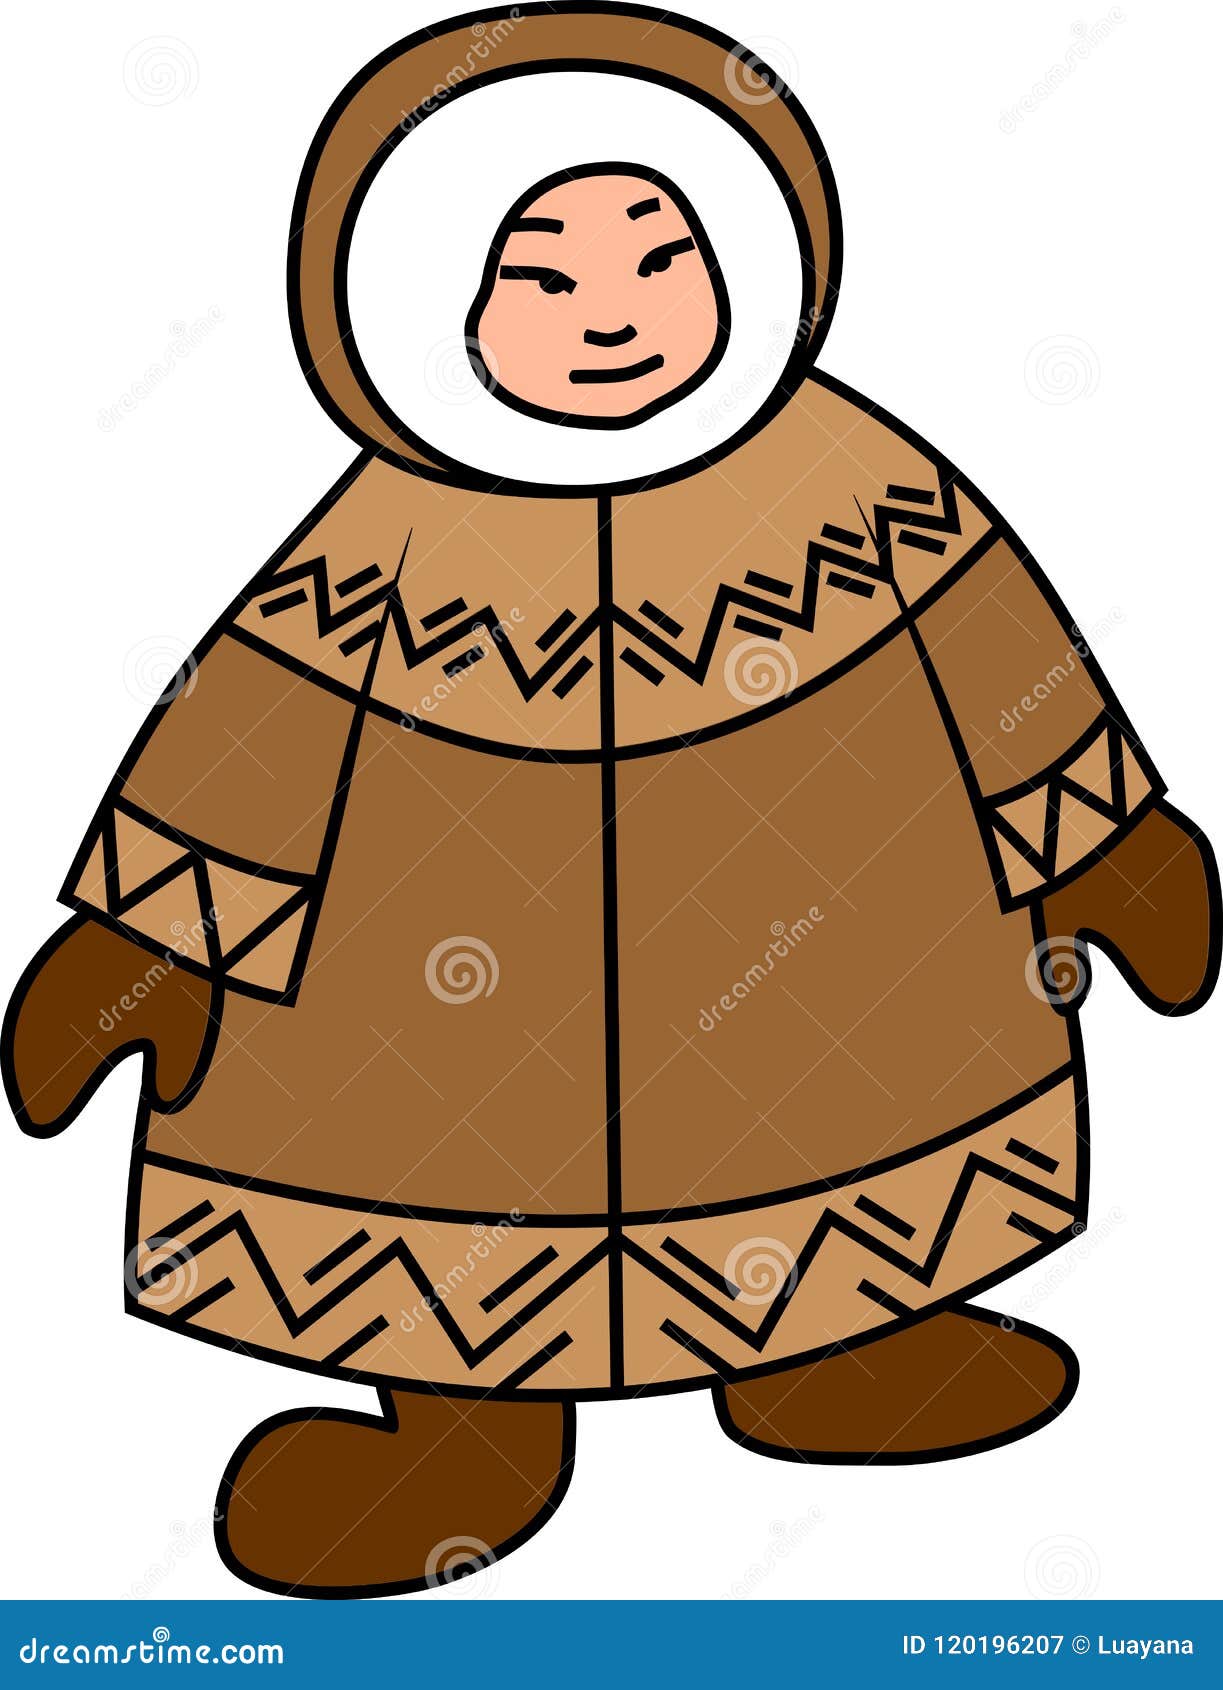 Eskimo in national clothes stock vector. Illustration of eskimo - 120196207